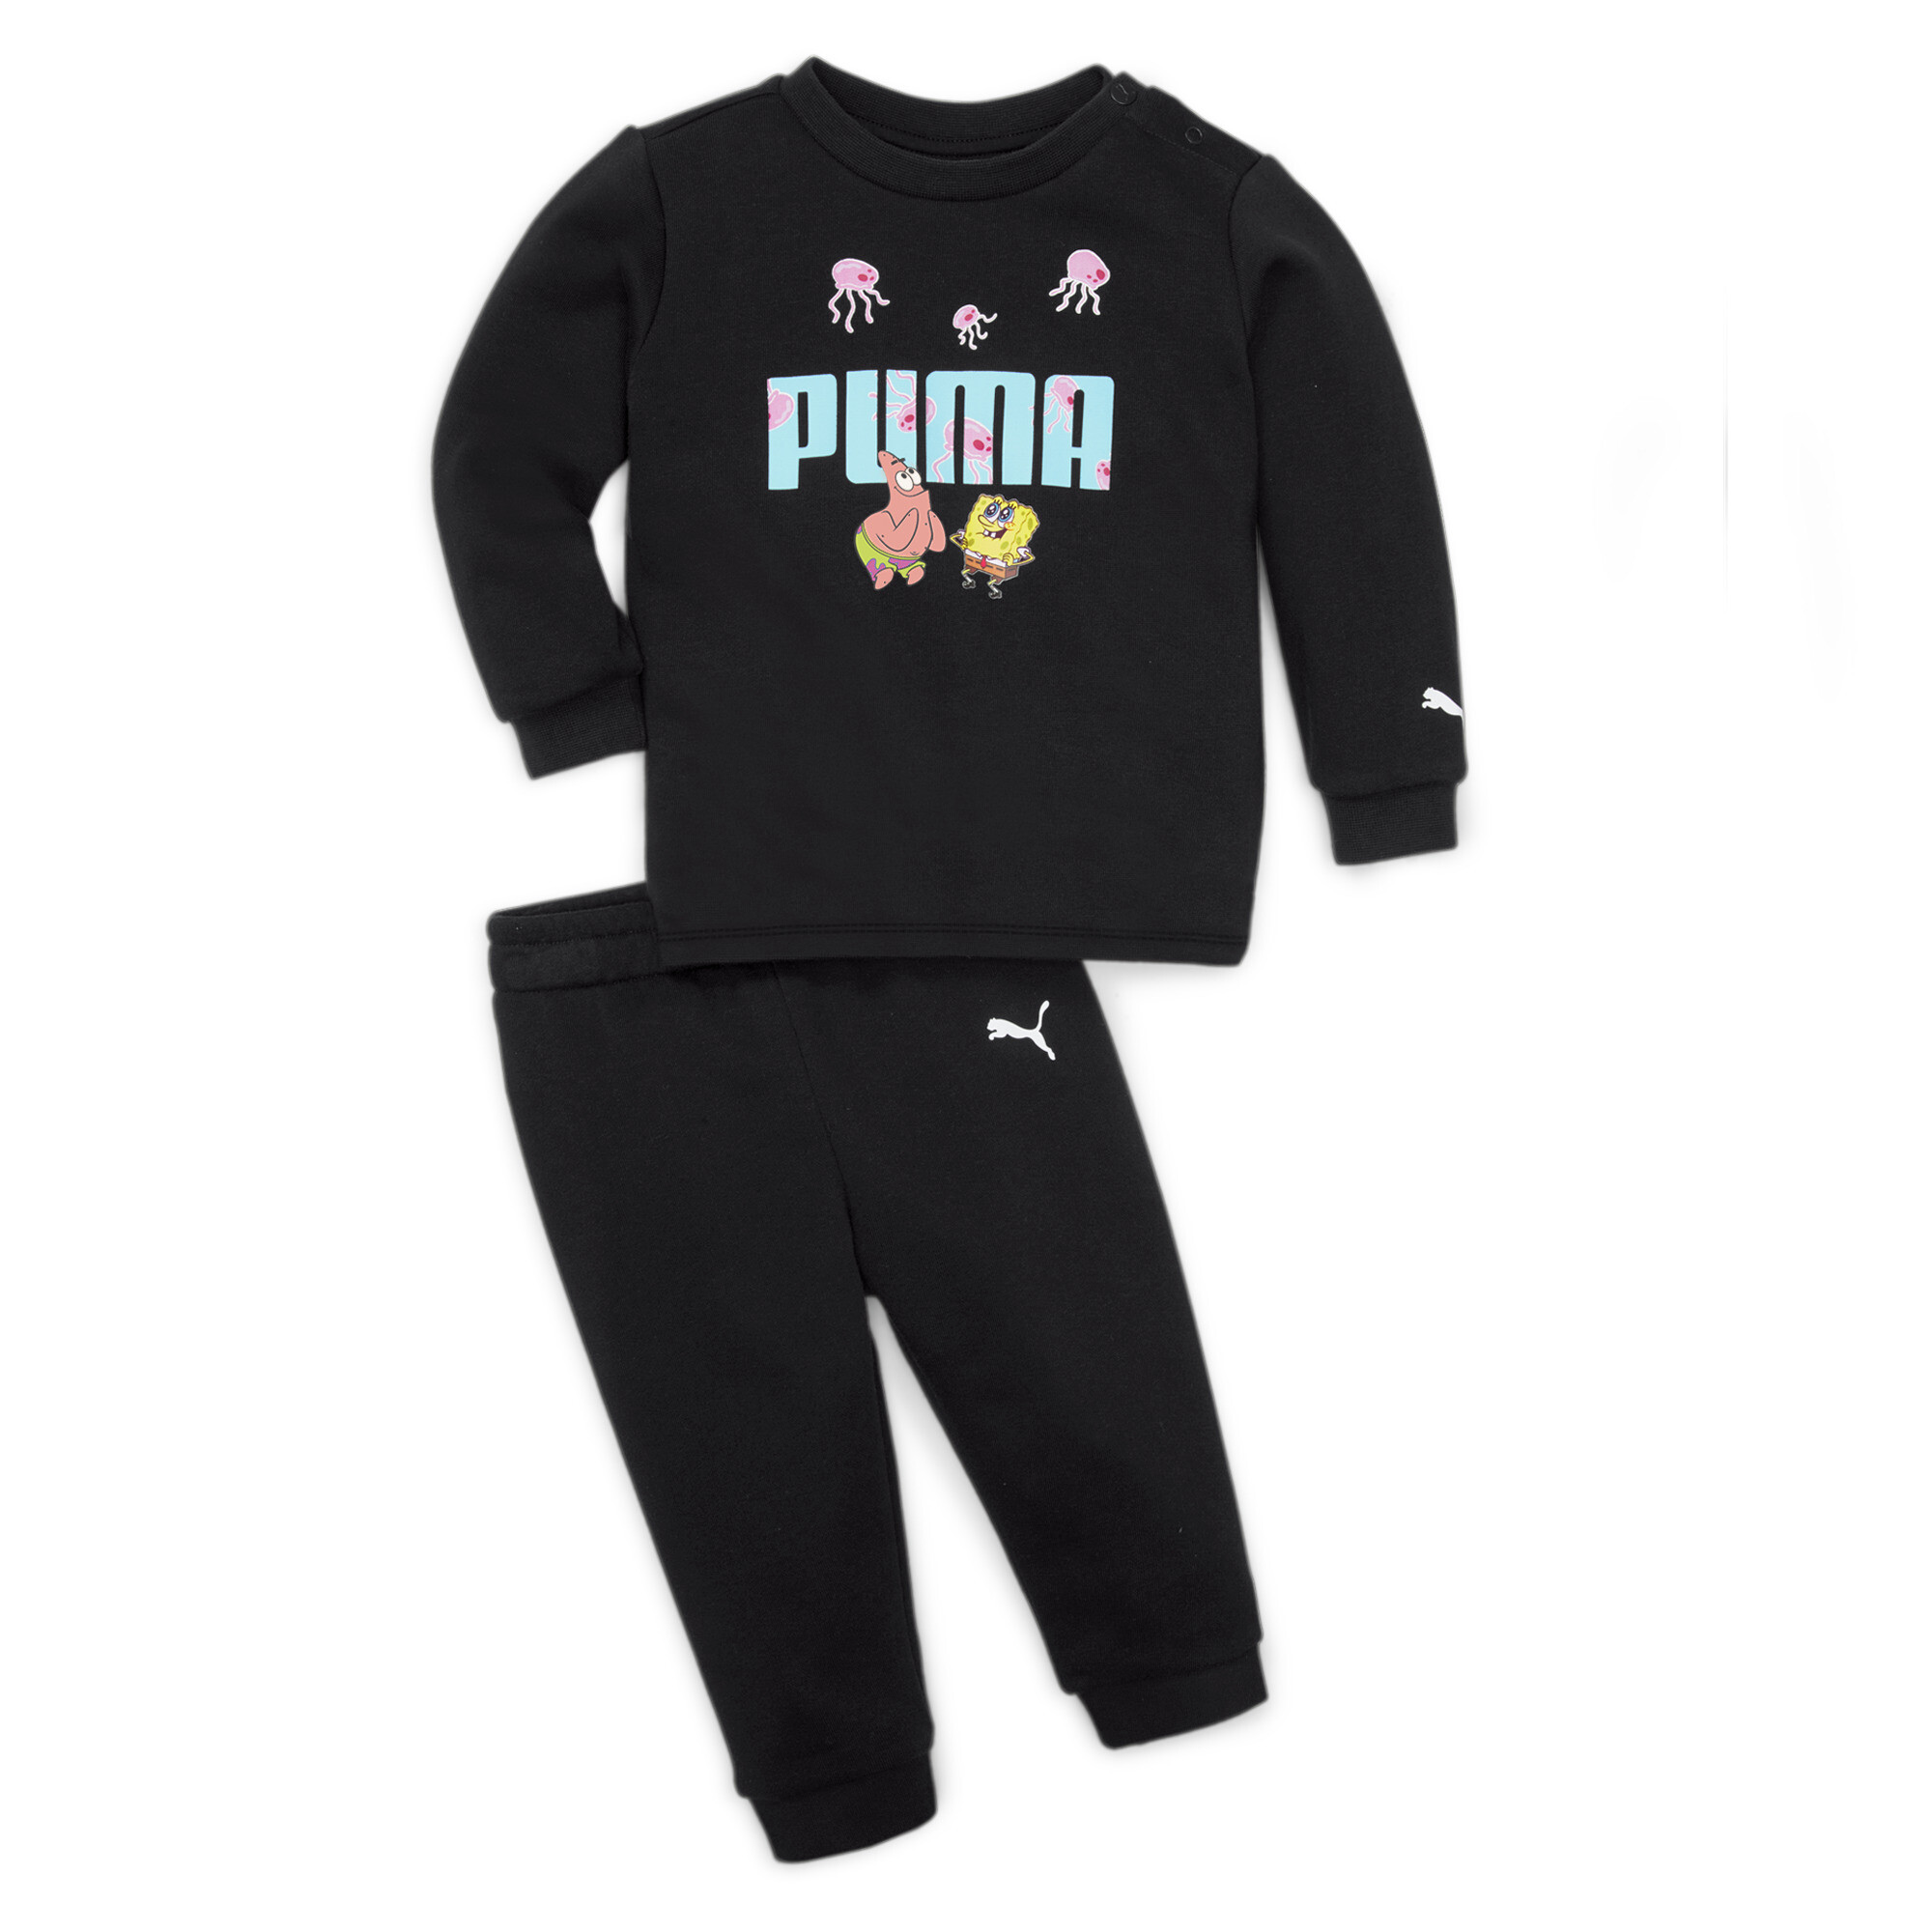 Puma X SPONGEBOB Jogger Set Kids, Black, Size 4-6M, Clothing